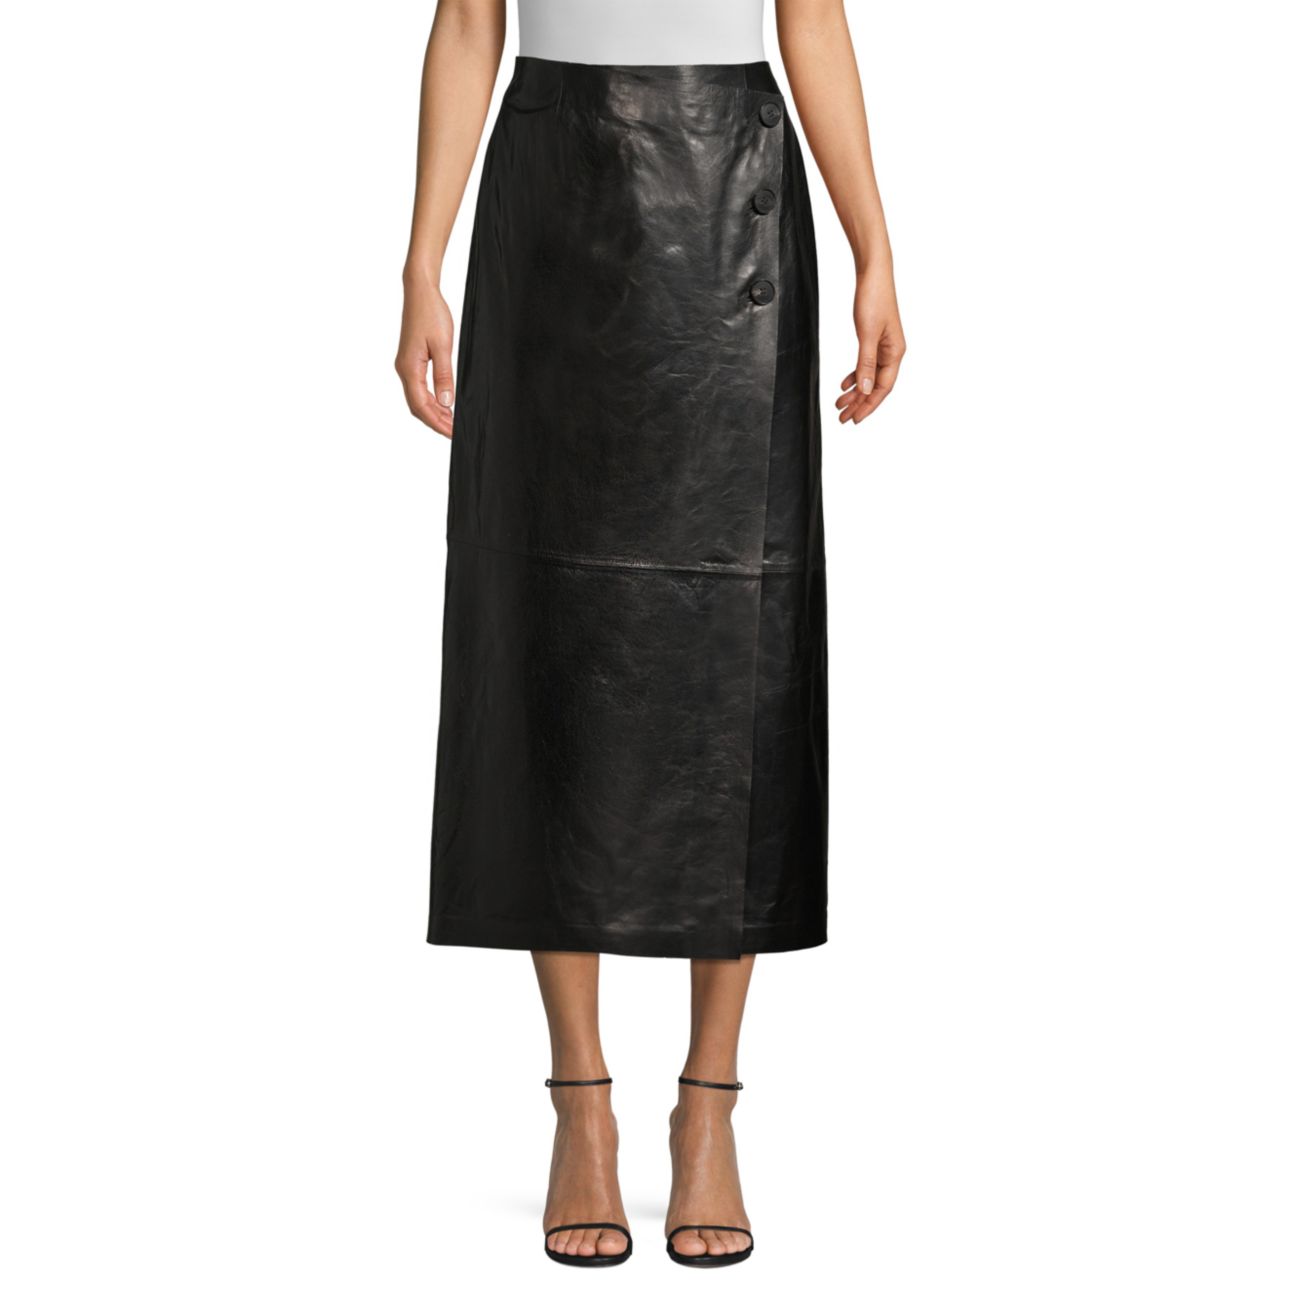 Leyla Leather Skirt Lafayette 148 New York